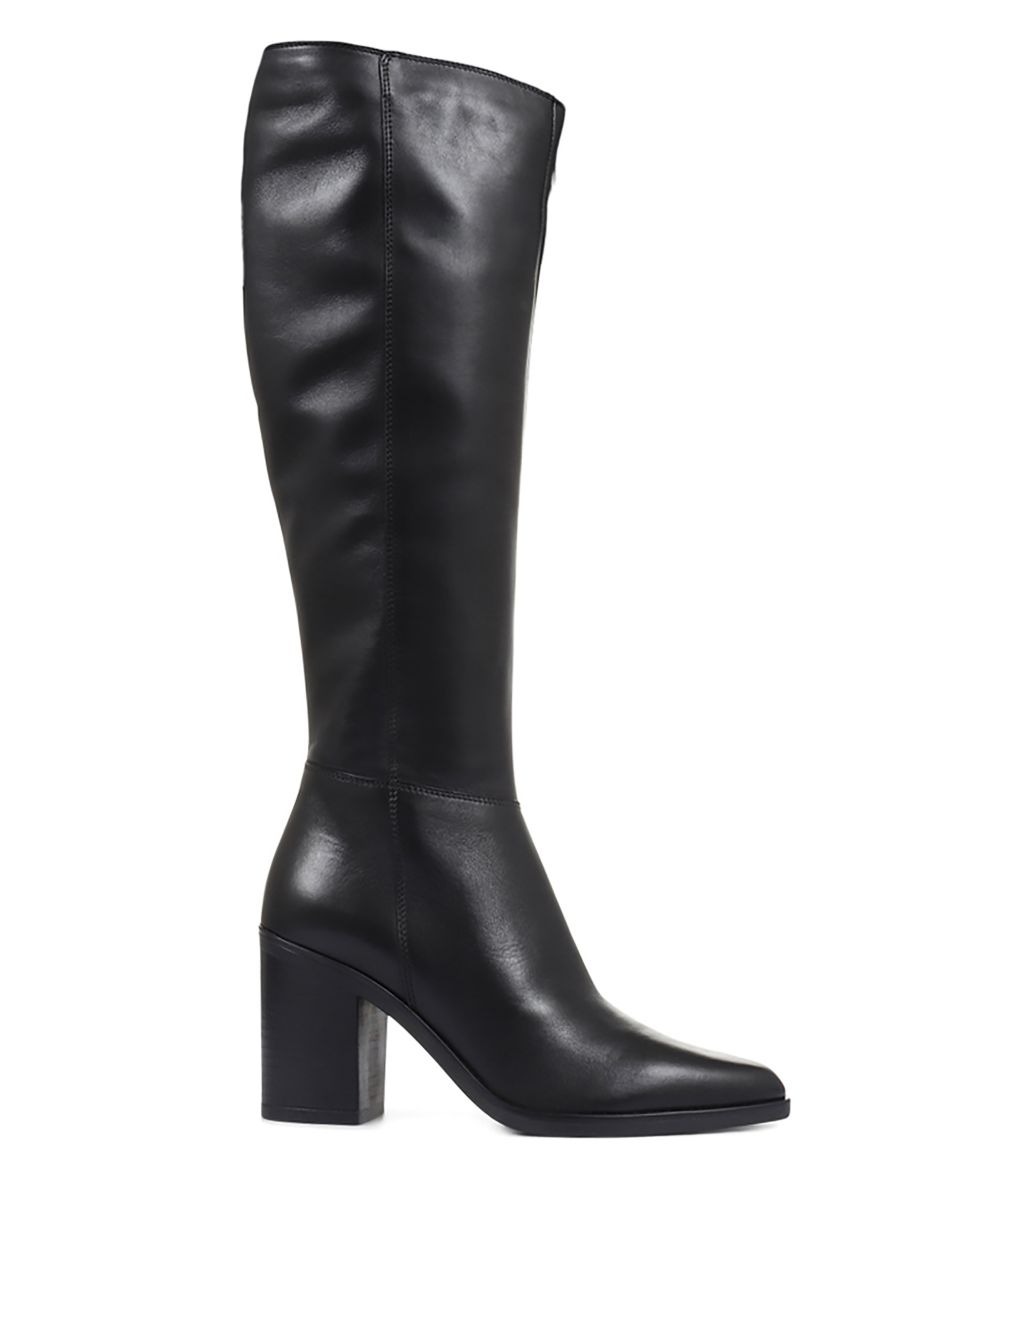 Regular Calf Leather Block Heel Pointed Knee High Boots image 2